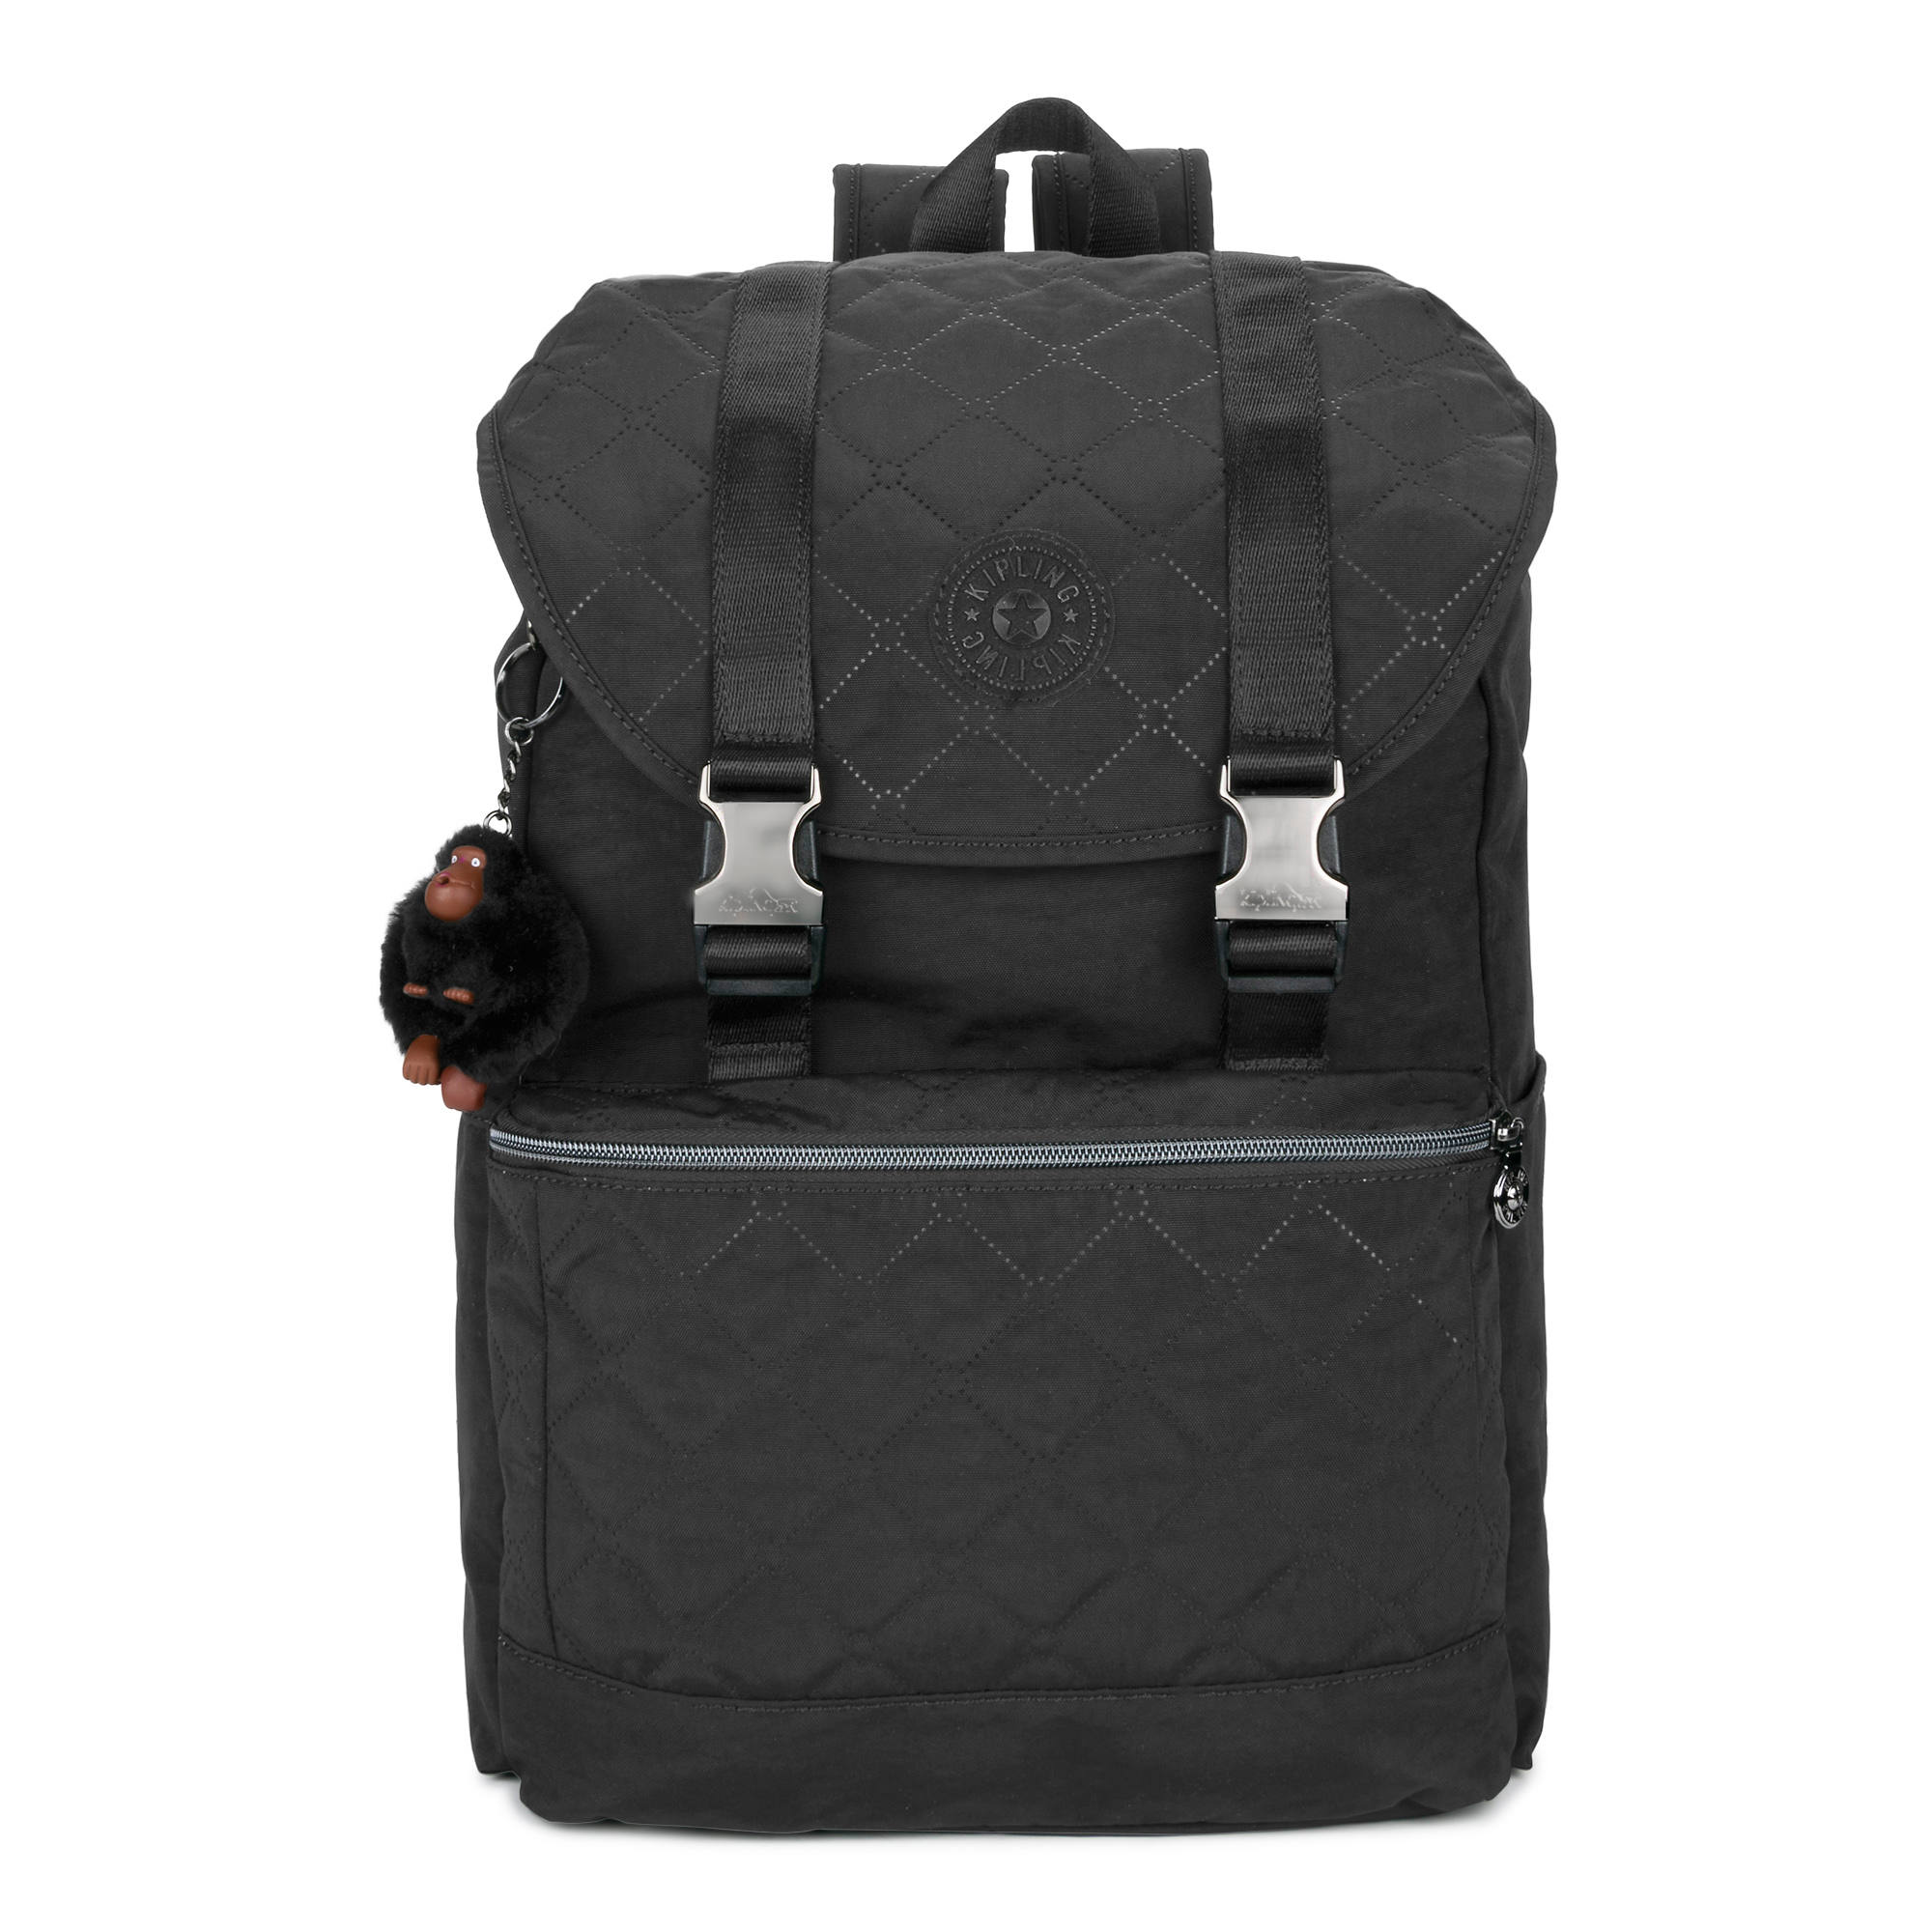 15" Laptop Backpack |